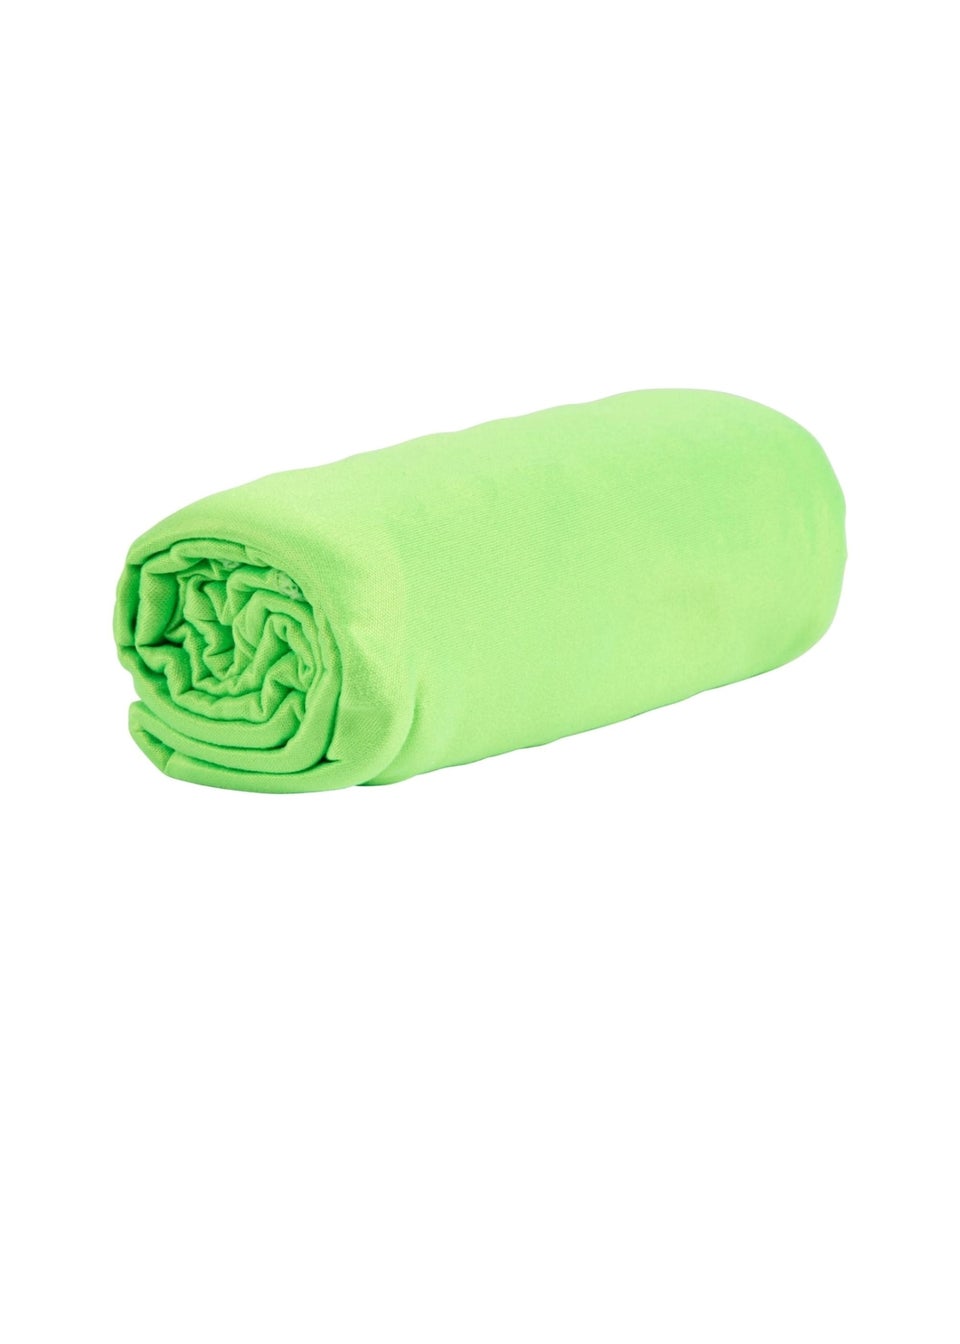 Trespass Green Compatto Dryfast Towel